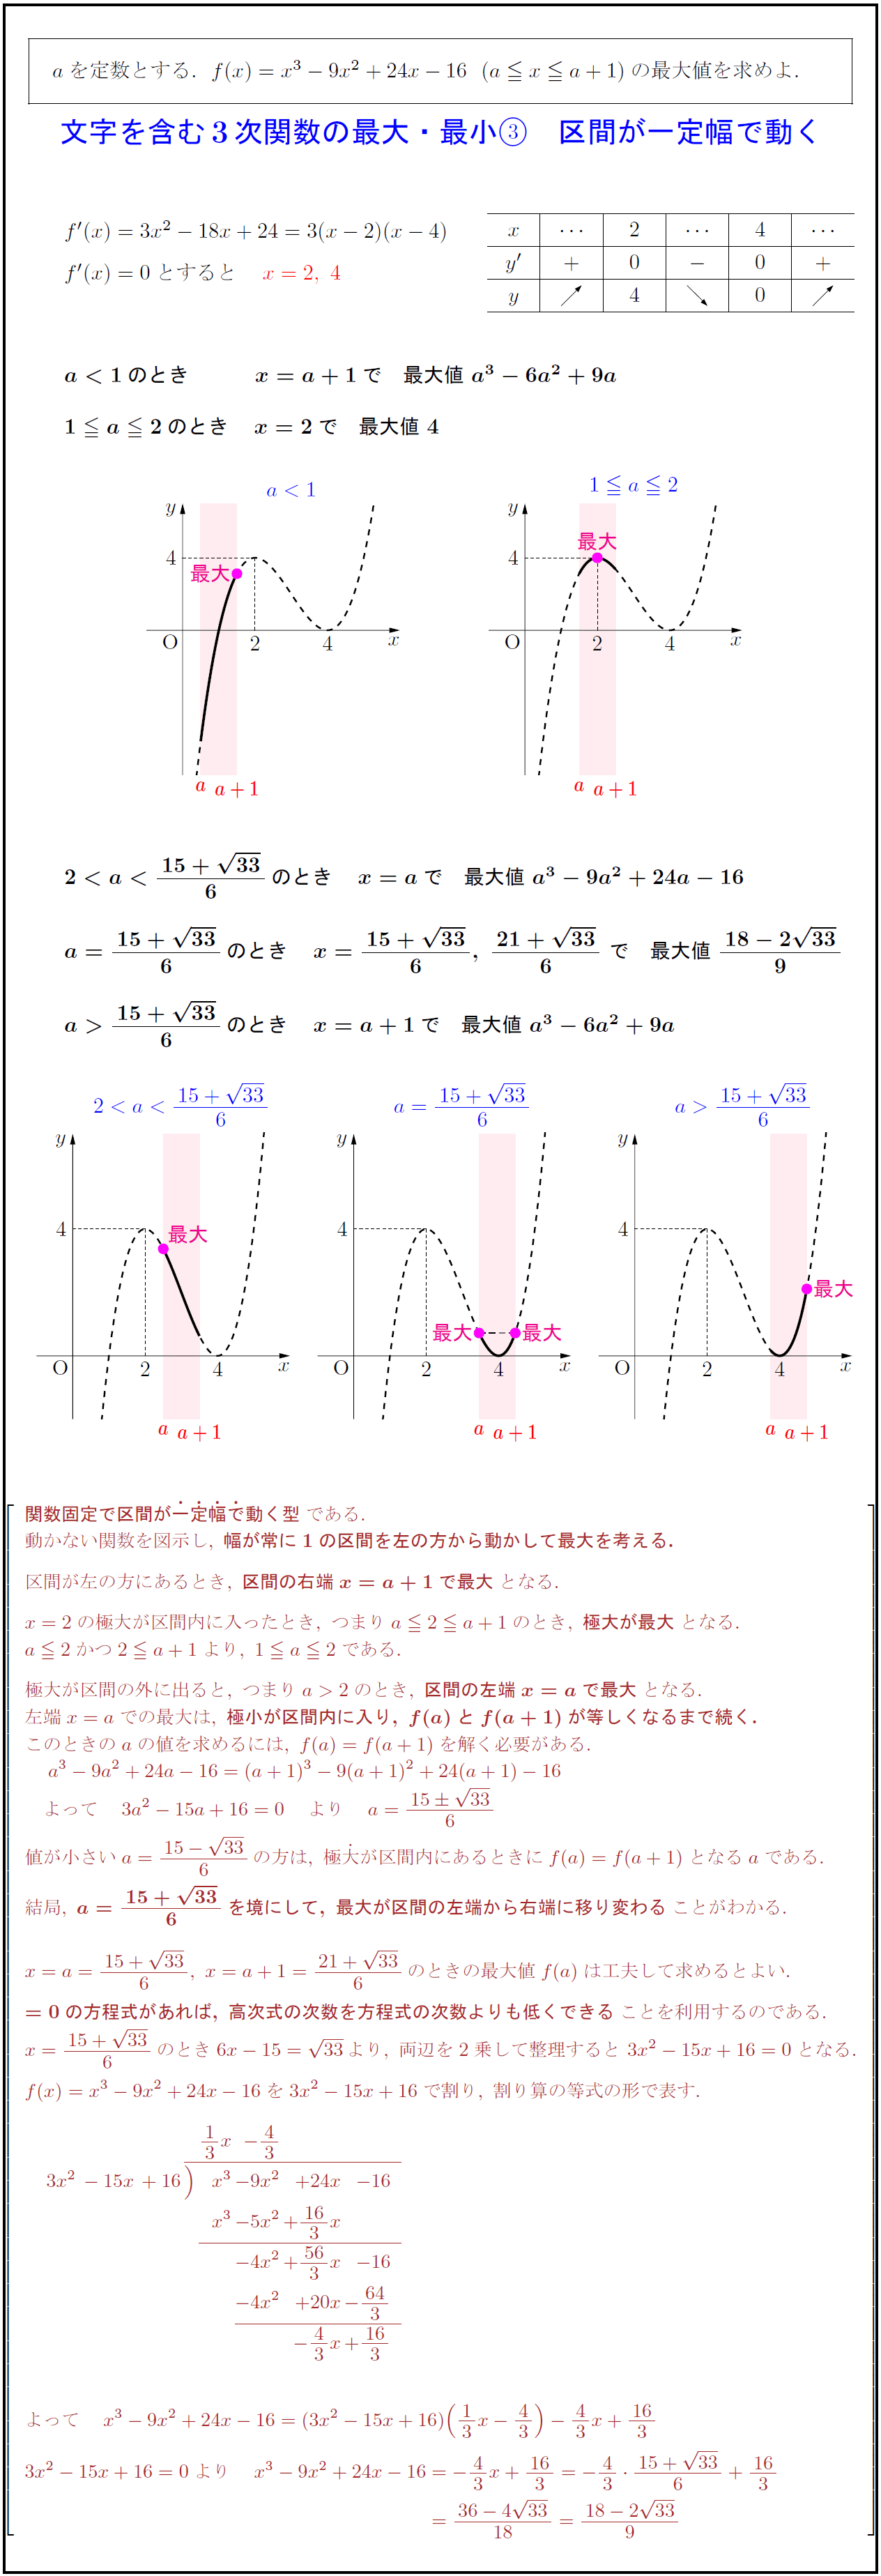 differential-formula